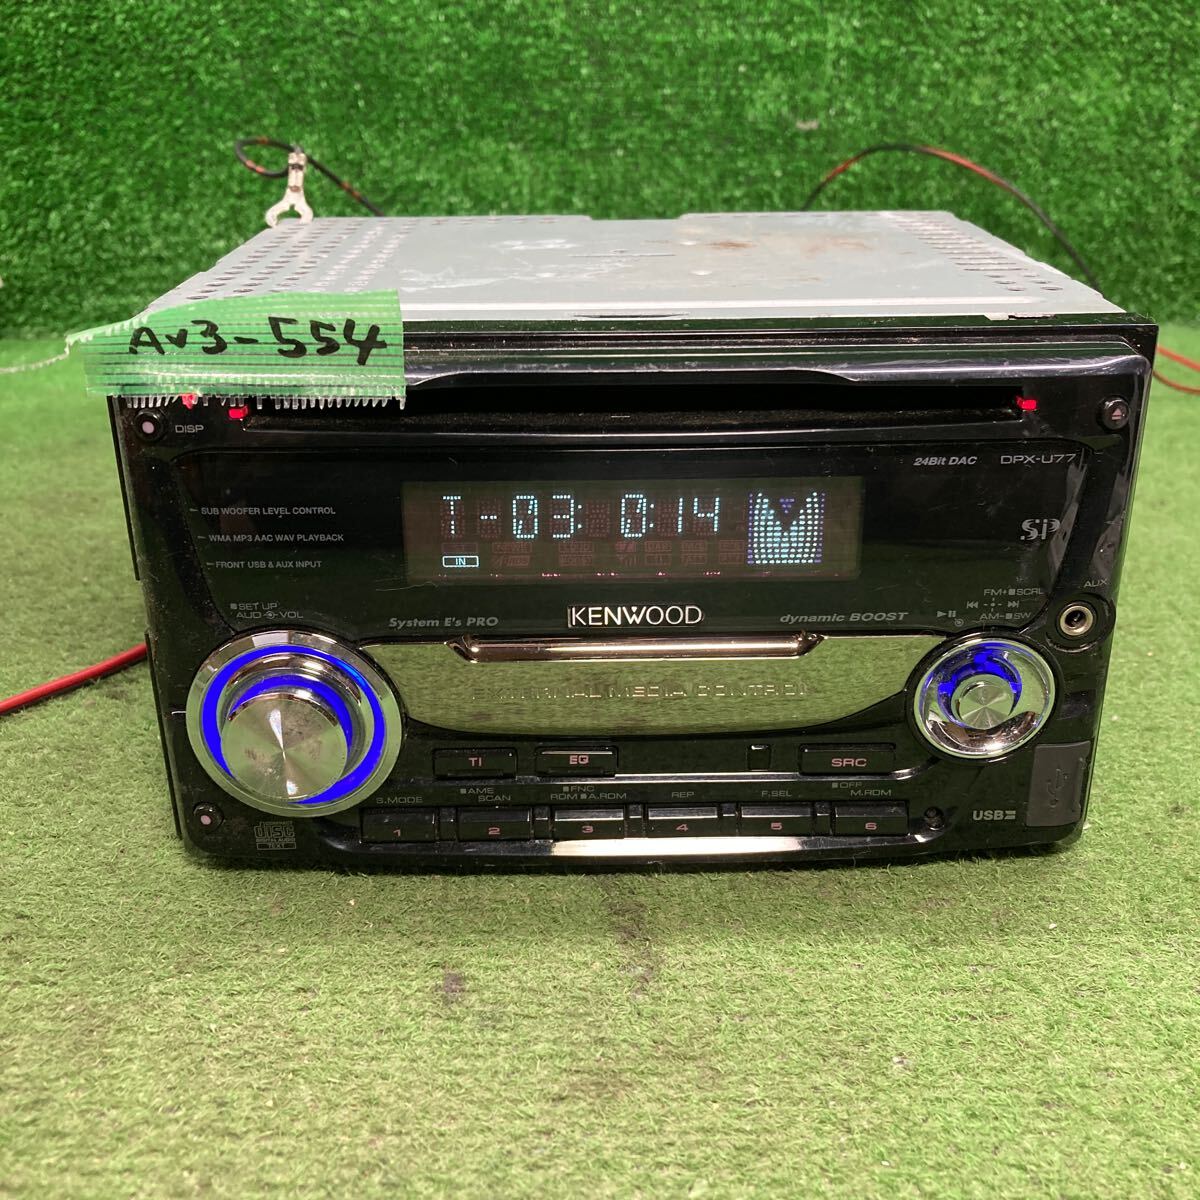 AV3-554 激安 カーステレオ KENWOOD DPX-U77 01000439 CD FM USB AUX 簡易動作確認済み 中古現状品_画像1